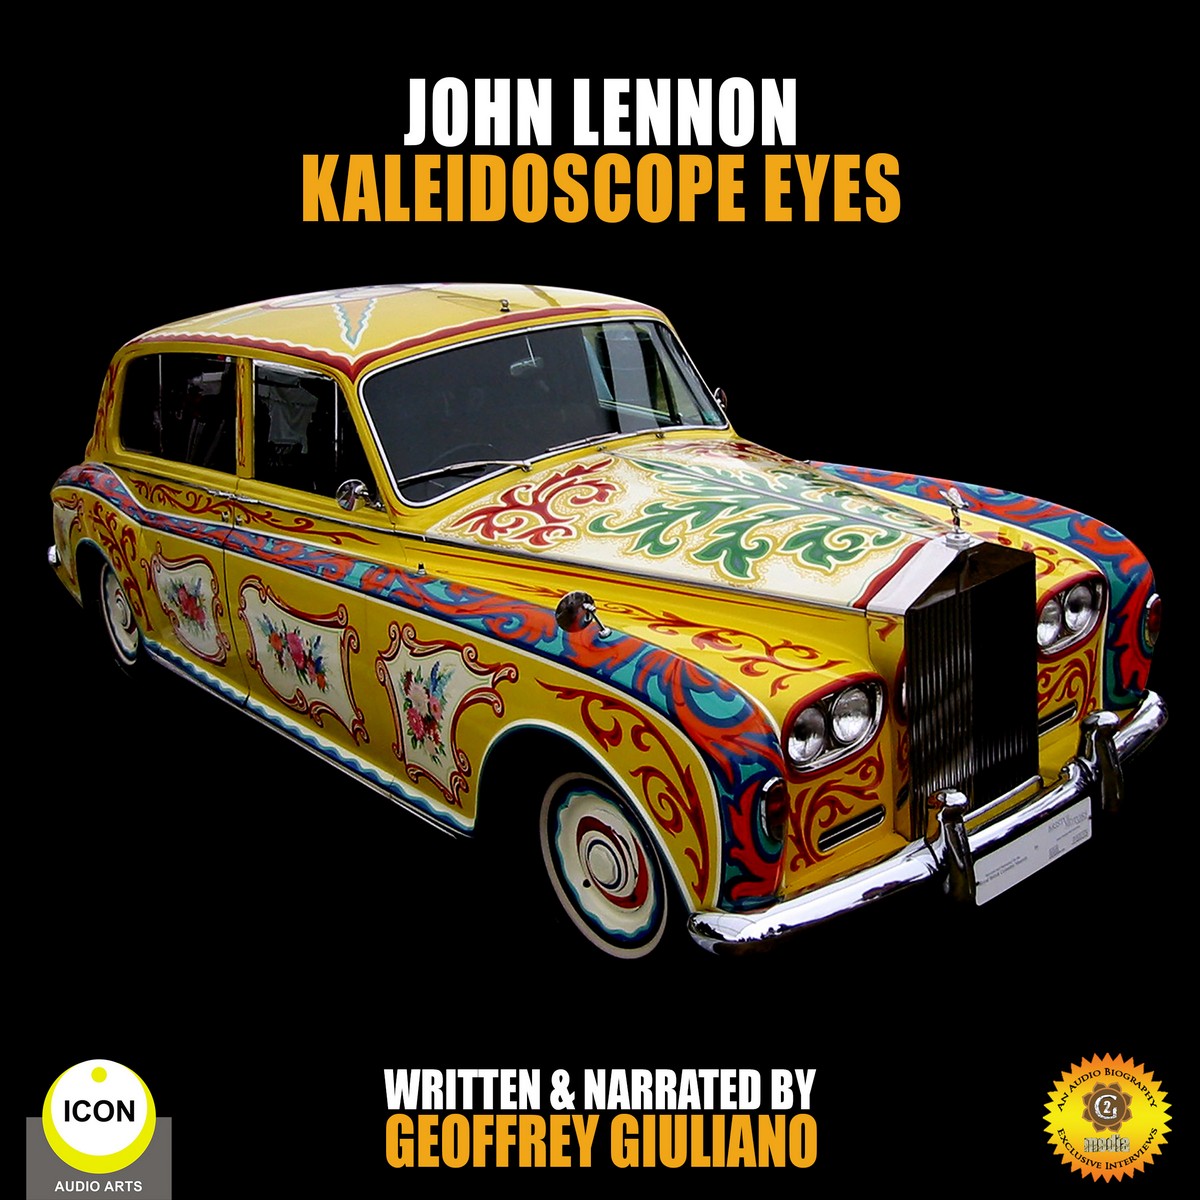 John Lennon Kaleidoscope Eyes